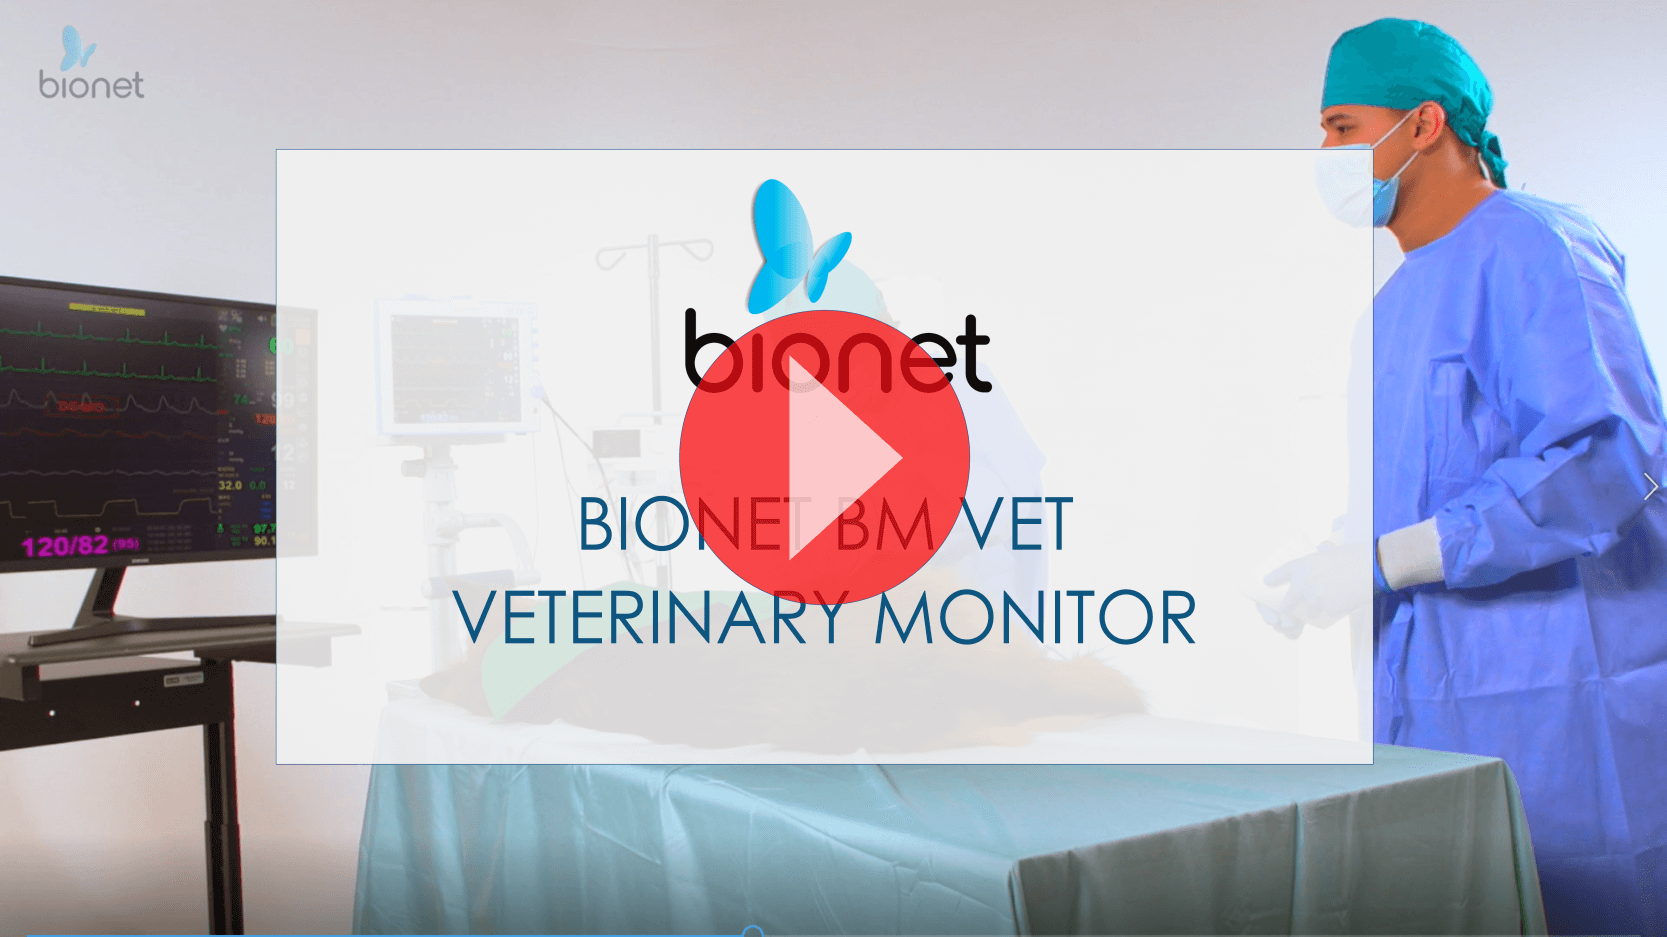 BIONET BM VET Veterinary Monitor